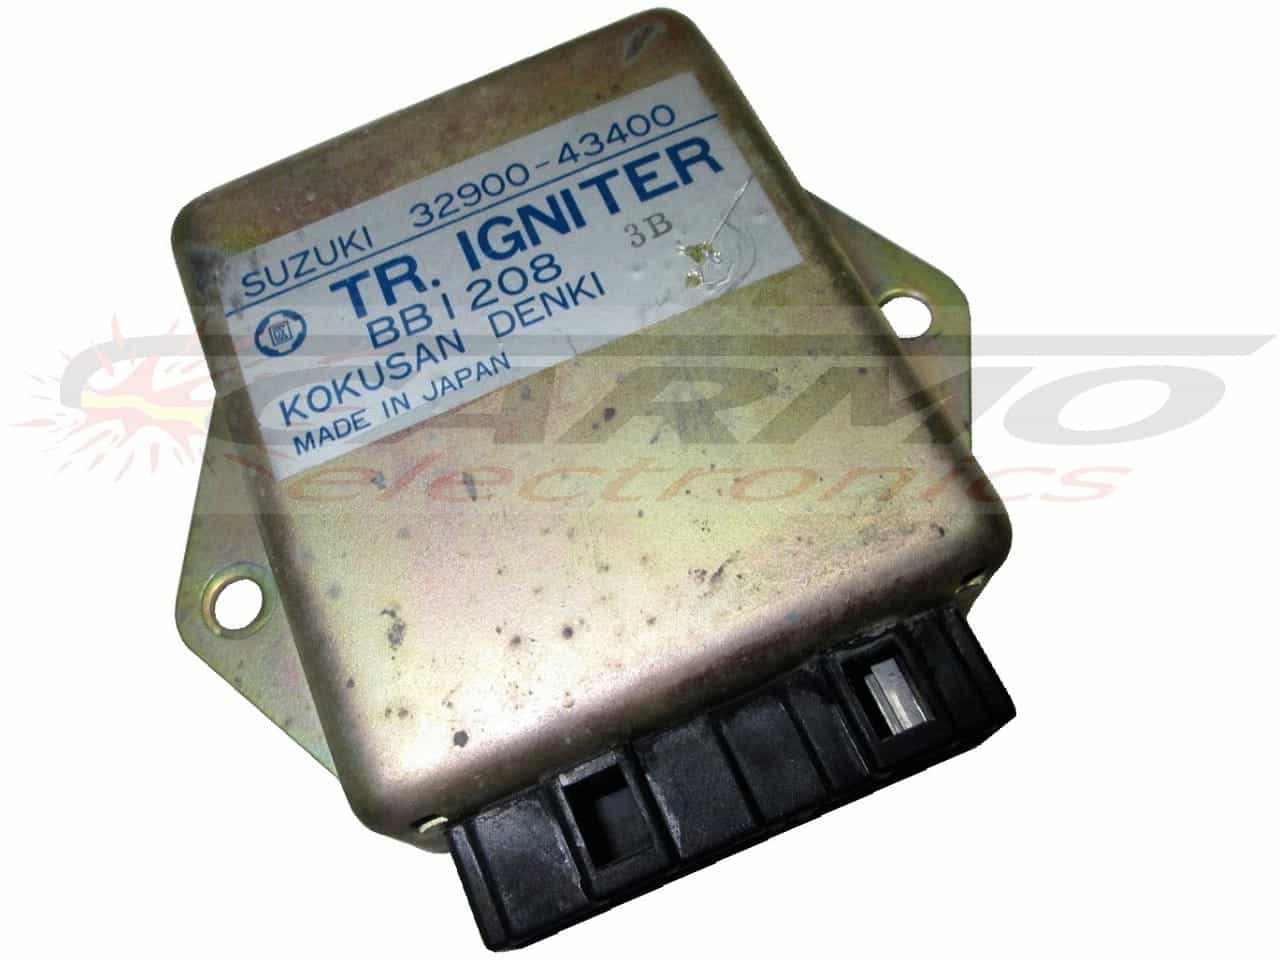 GSX550 igniter ignition module CDI TCI Box (32900-43400, BB1208)